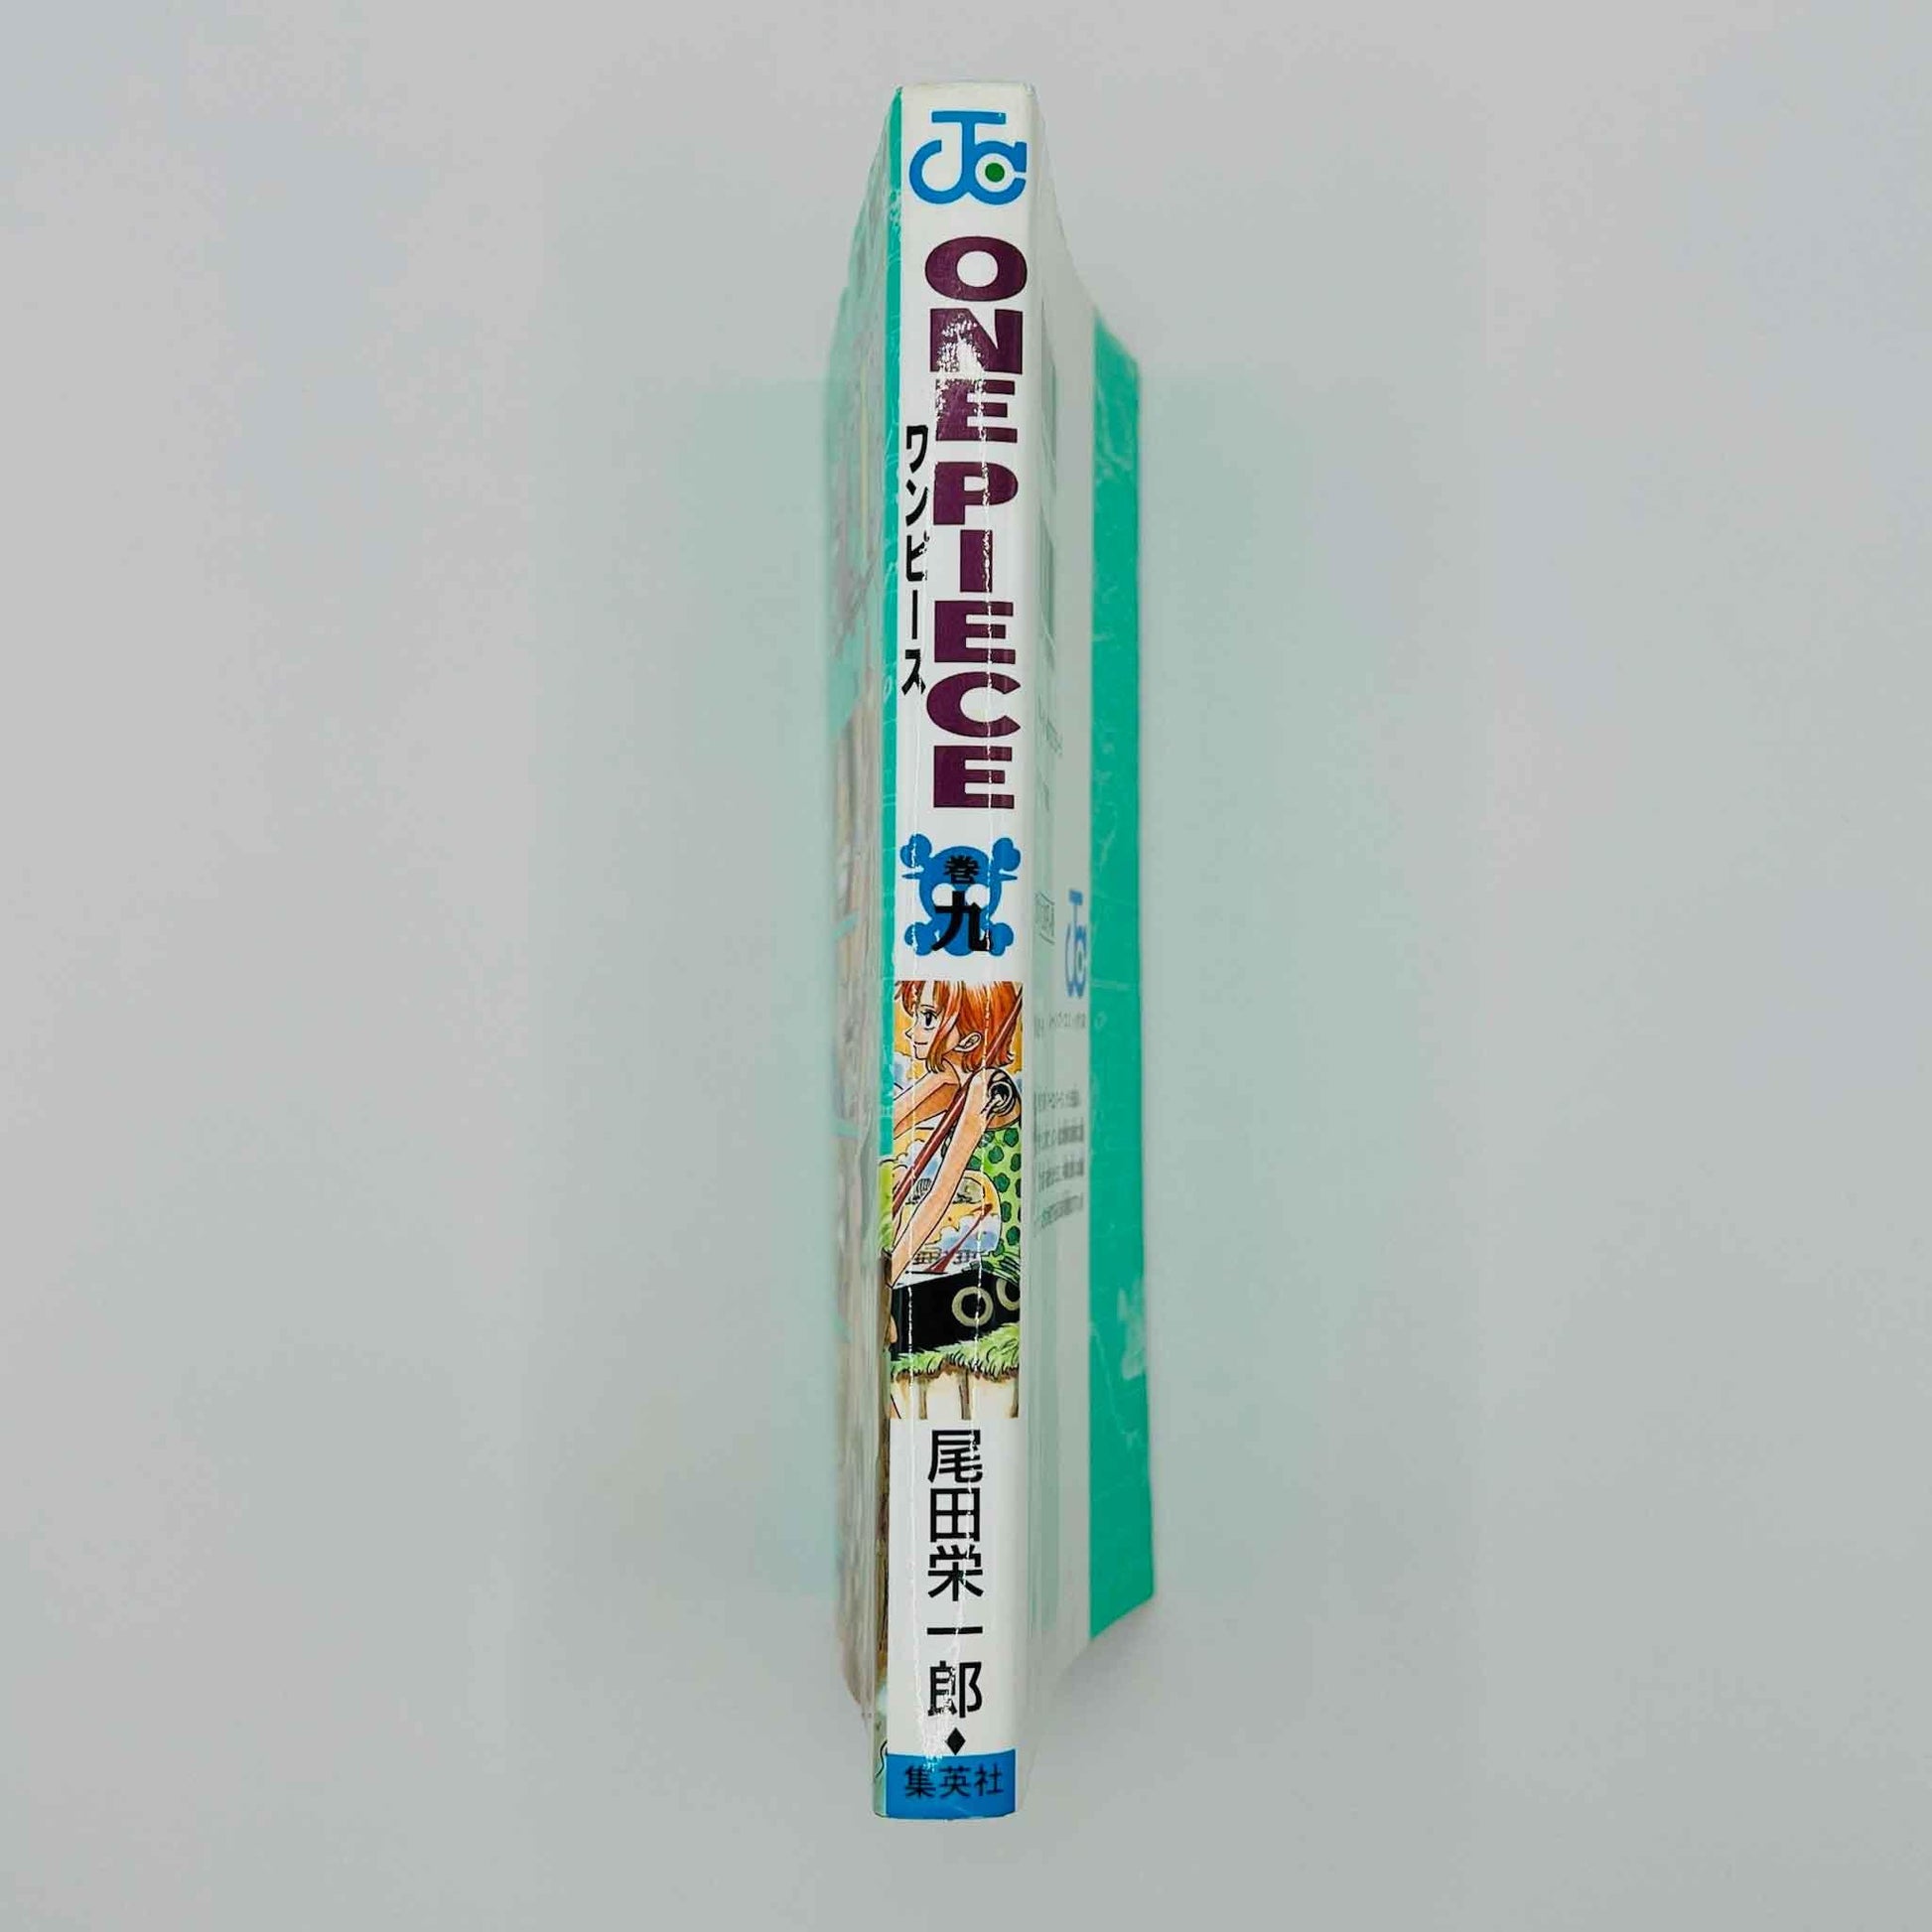 One Piece - Volume 09 - 1stPrint.net - 1st First Print Edition Manga Store - M-OP-09-001